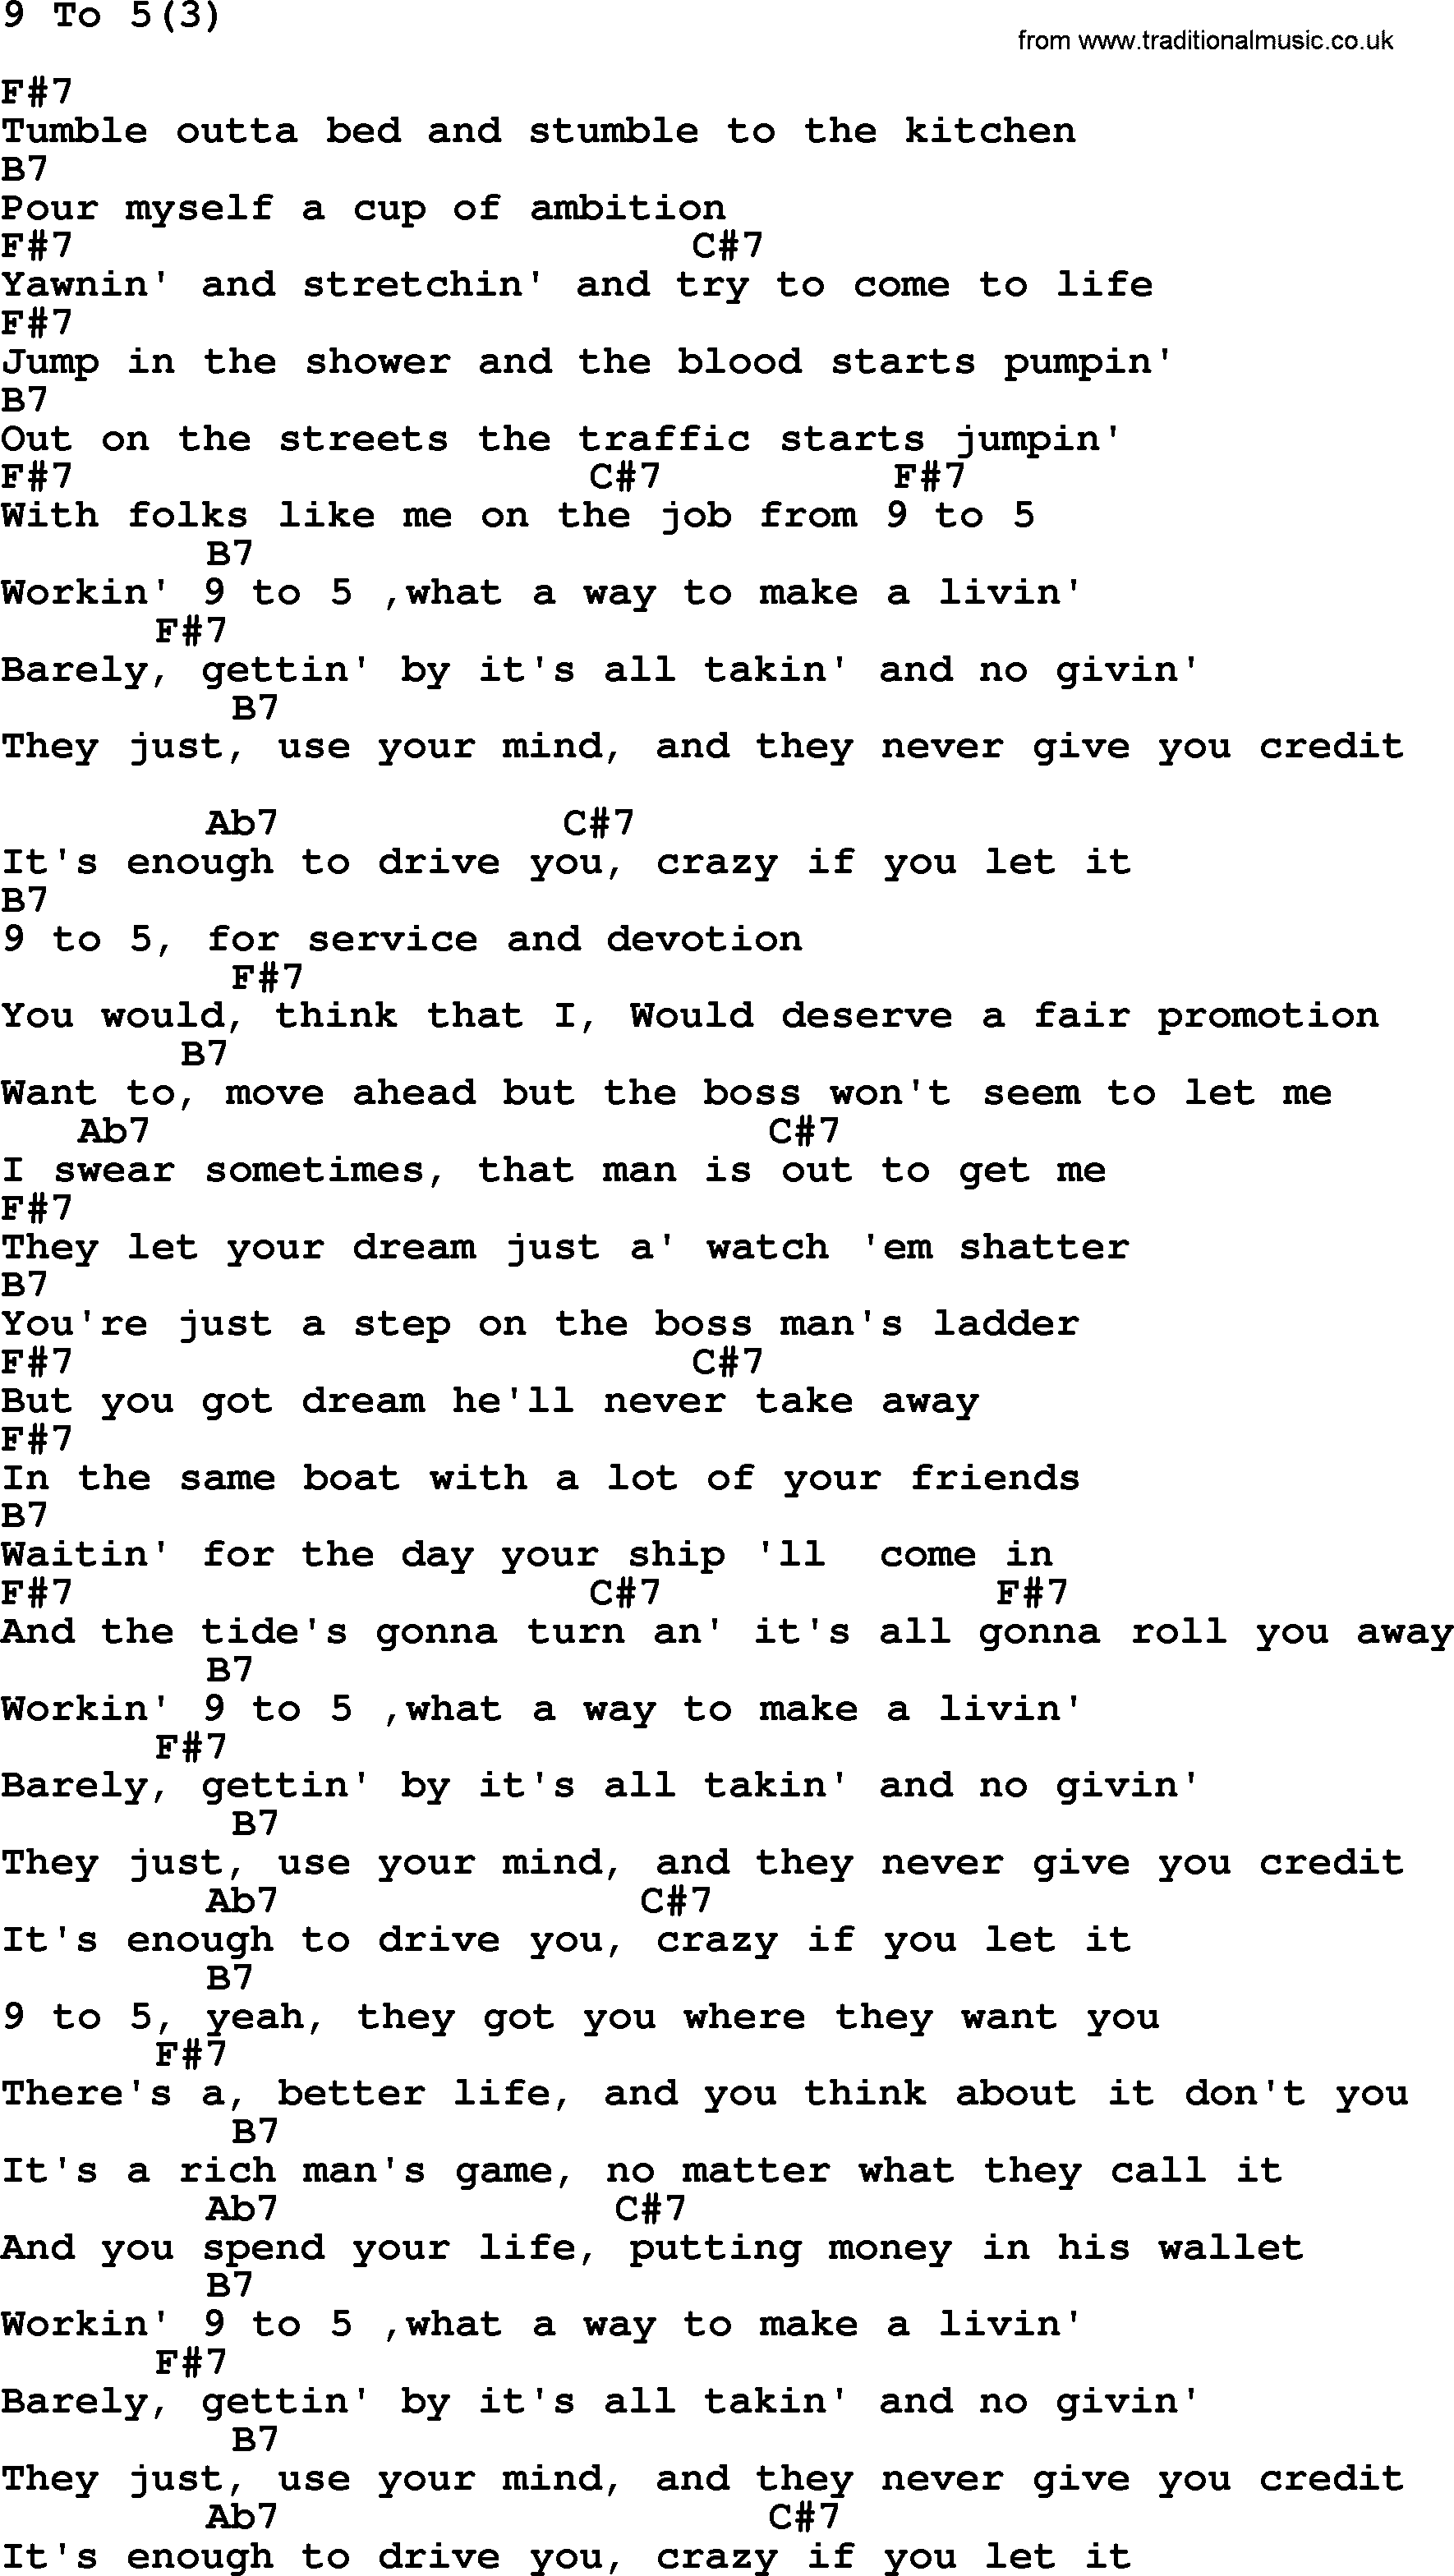 Dolly Parton song 9 To 5(3), lyrics and chords